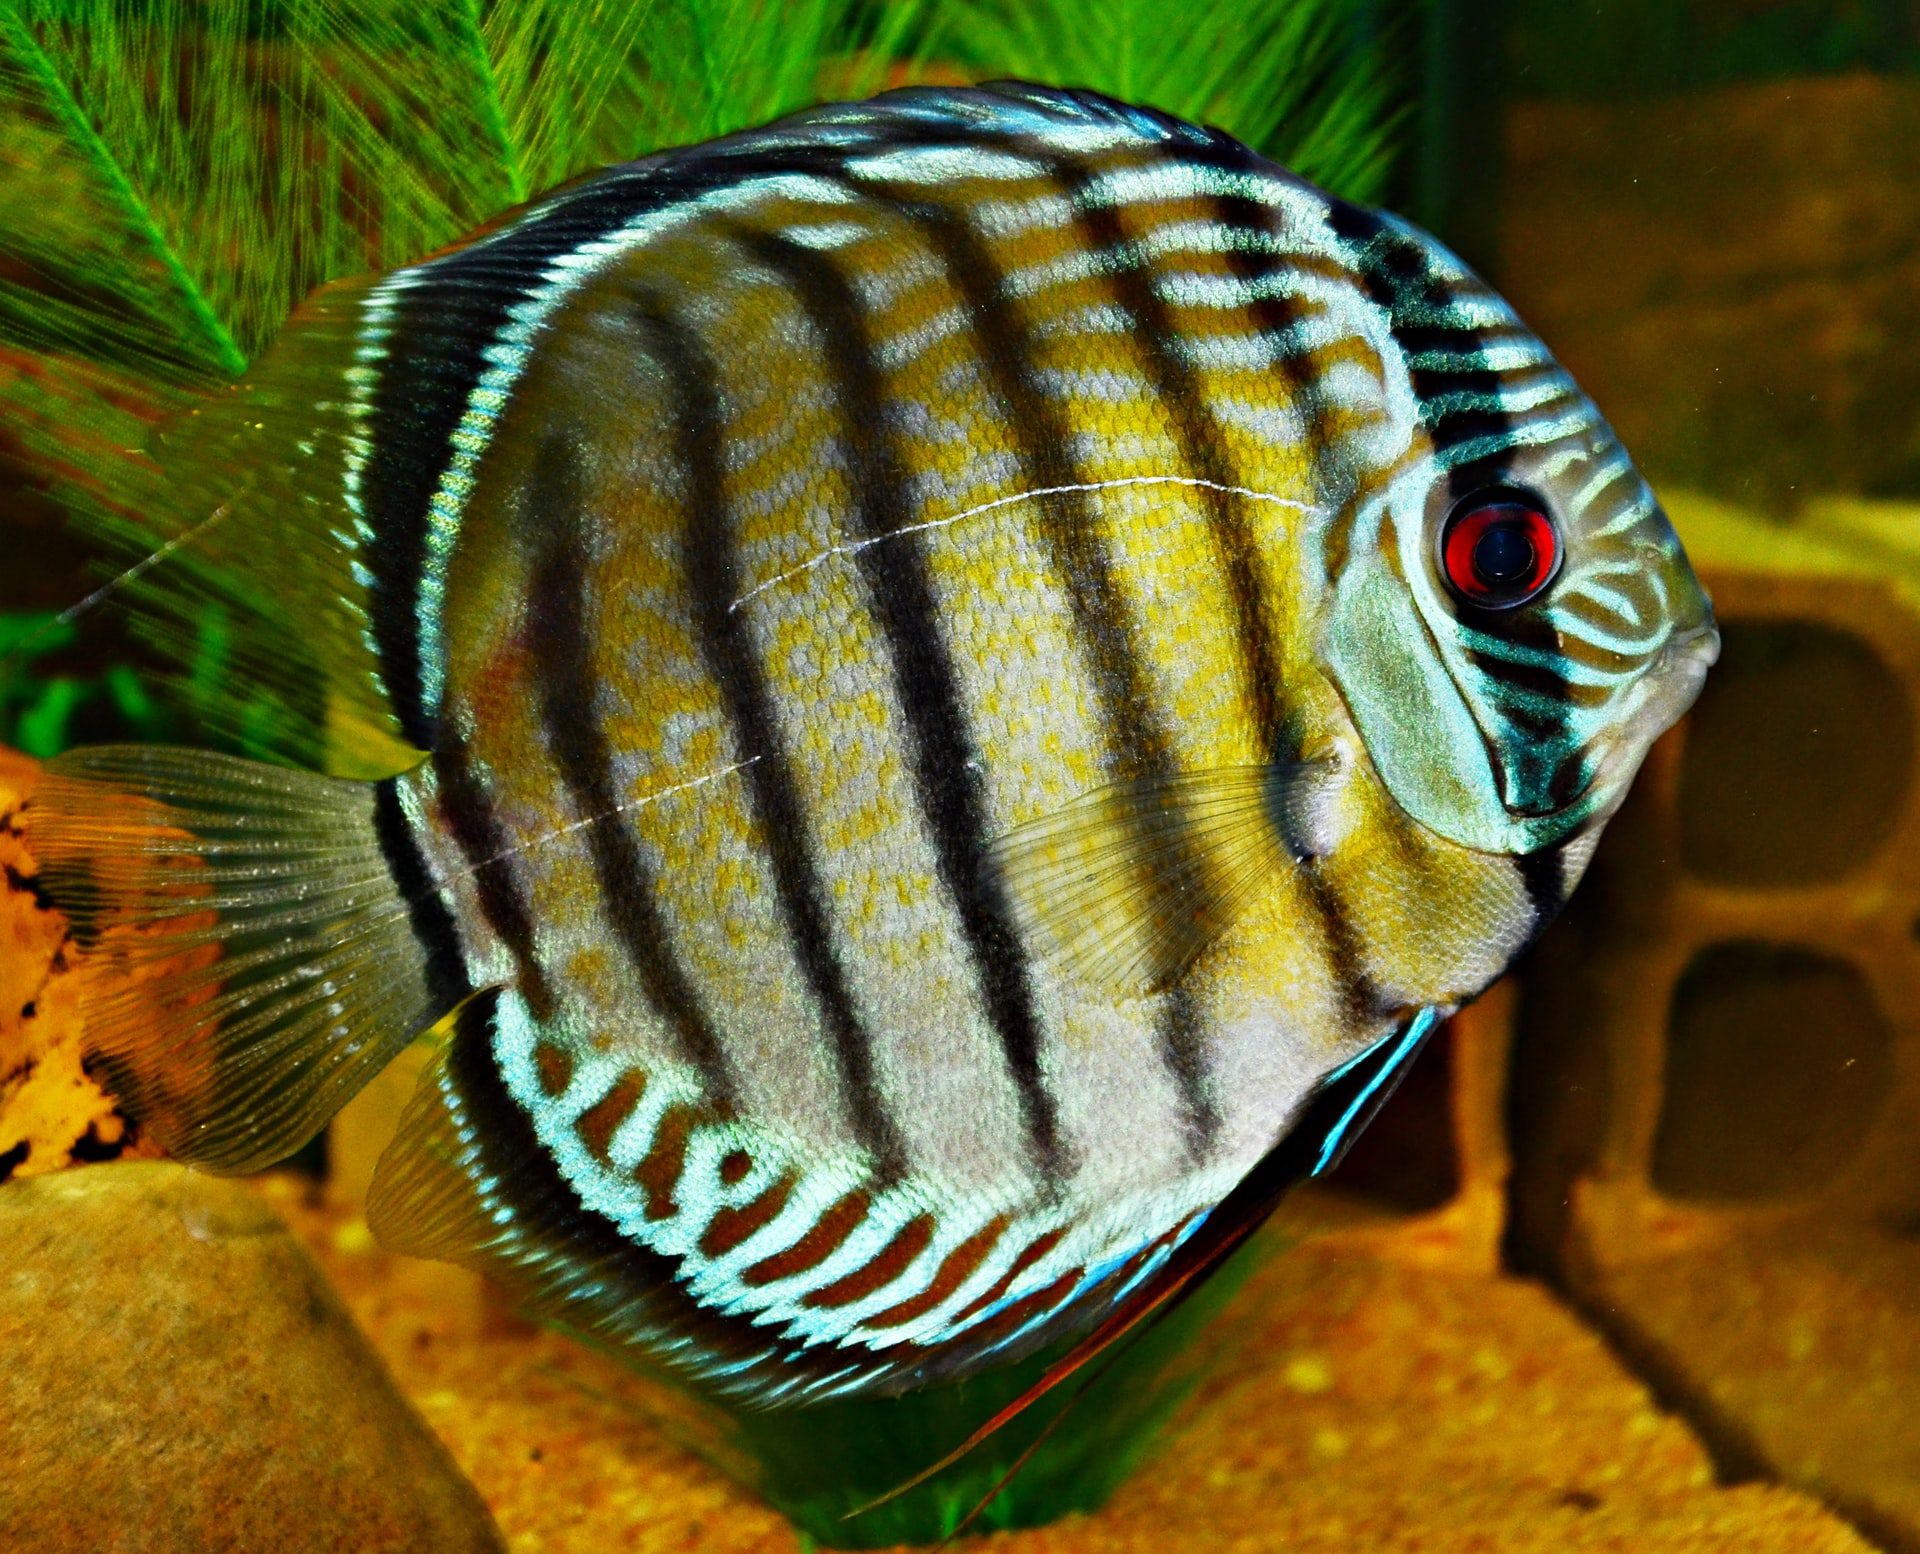 A DIscus fish in a home aquarium